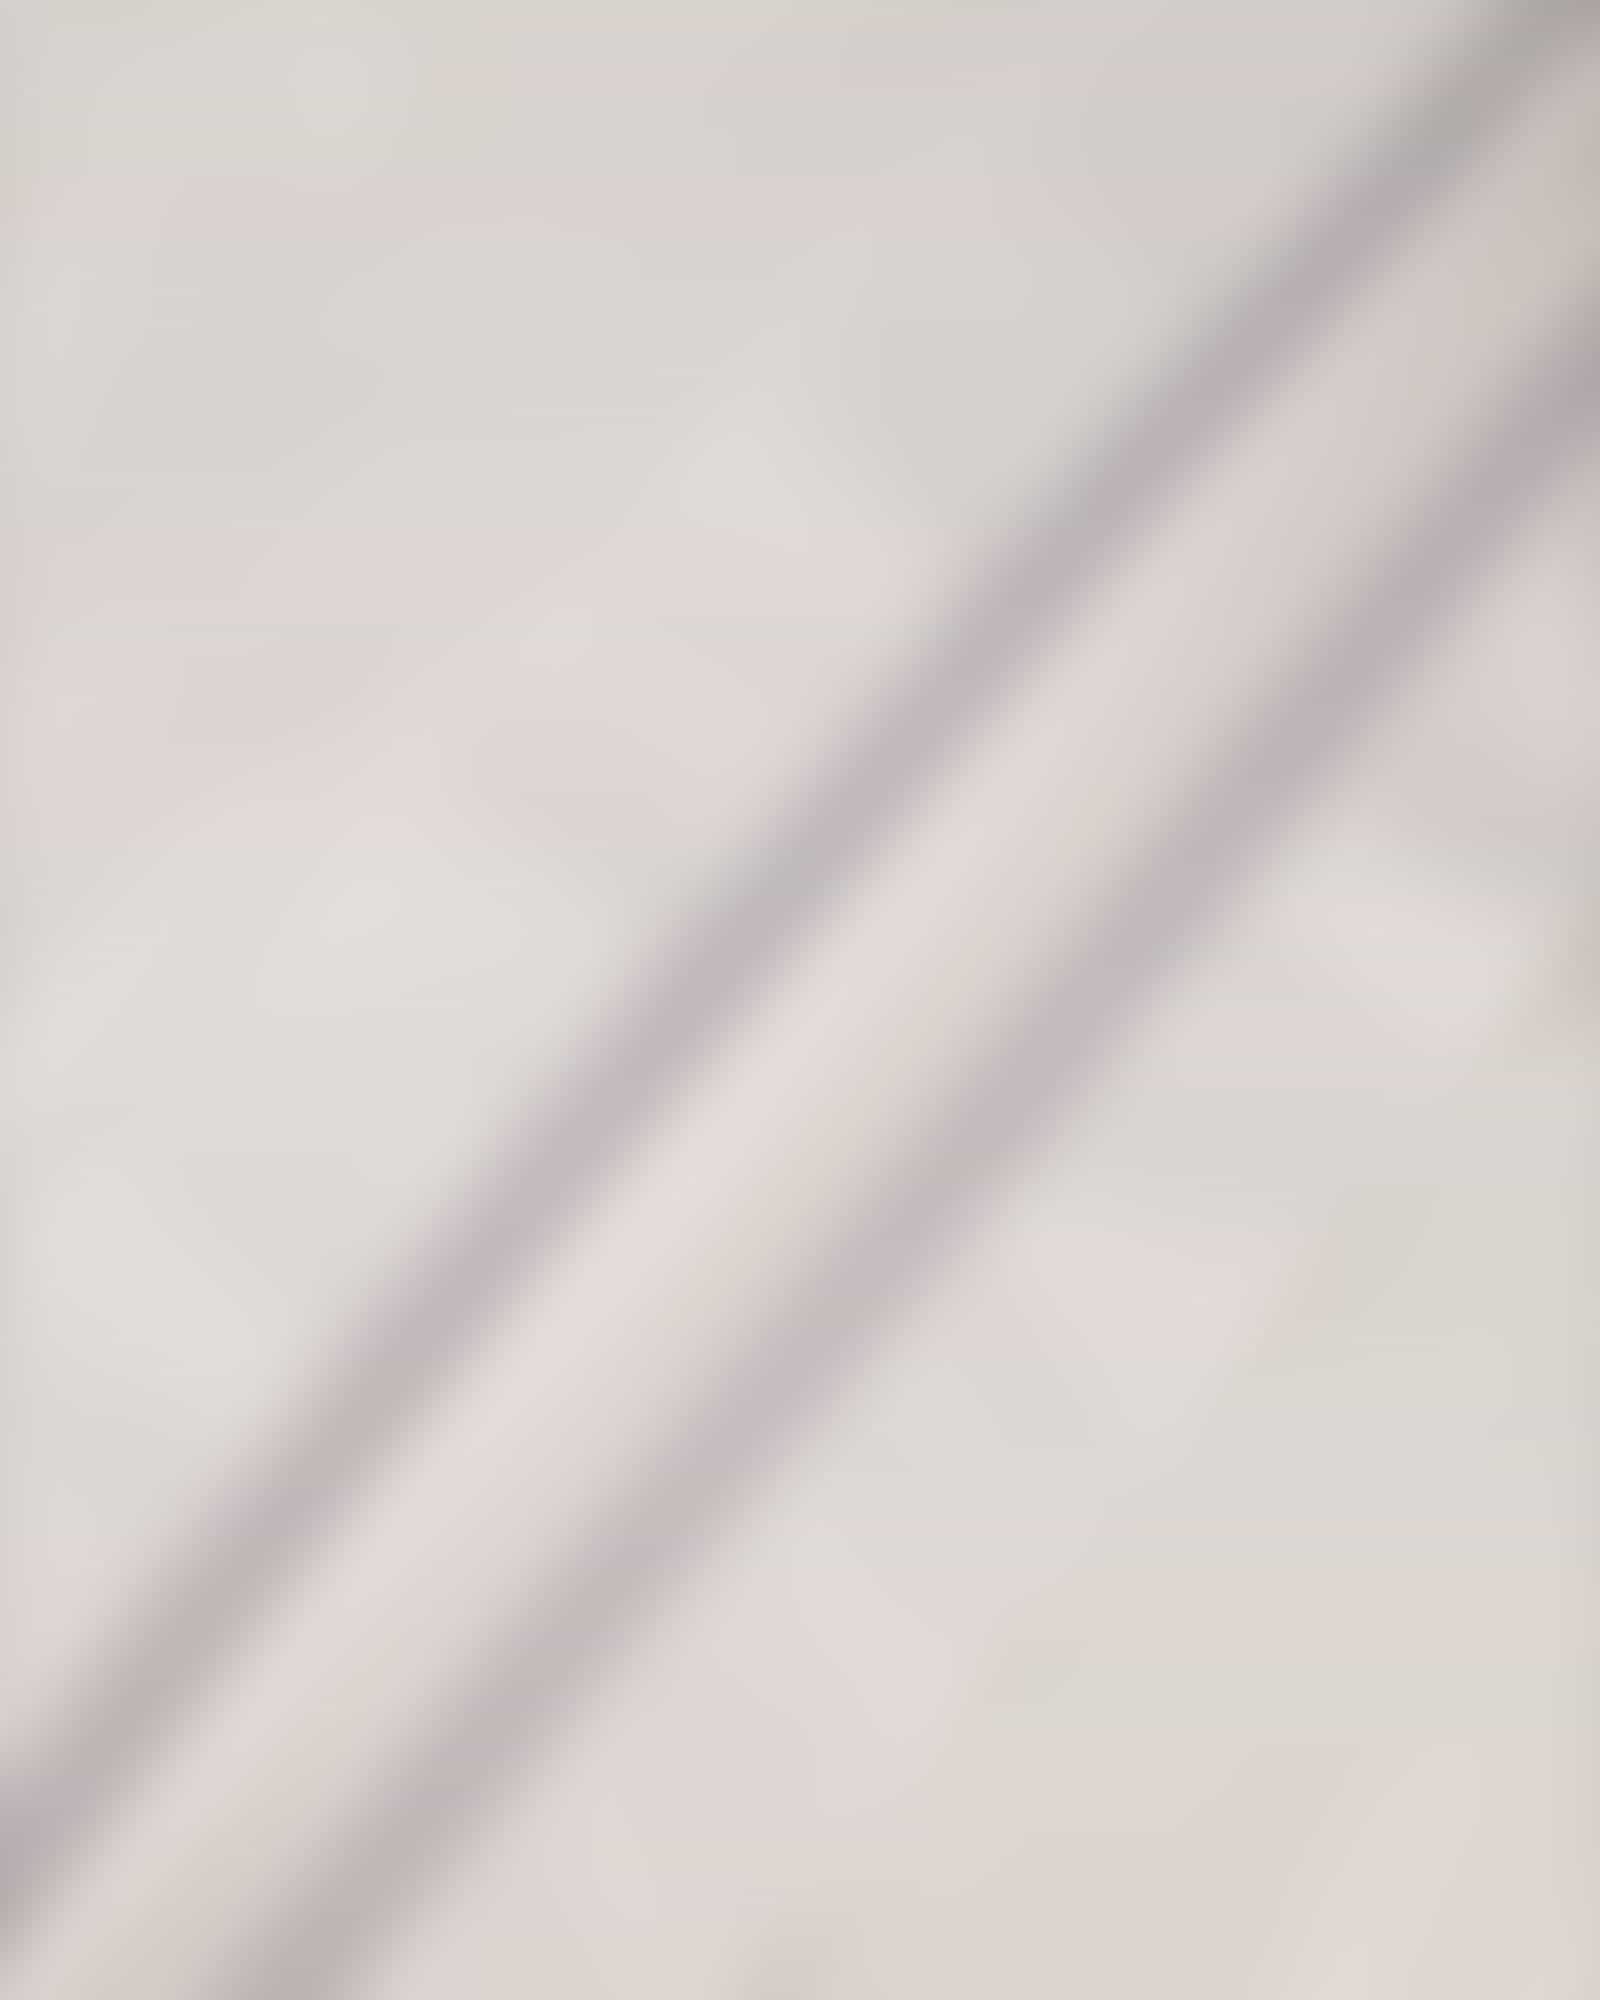 JOOP Herren Bademantel Kimono Pique 1656 - Farbe: Weiß - 600 - M Detailbild 1